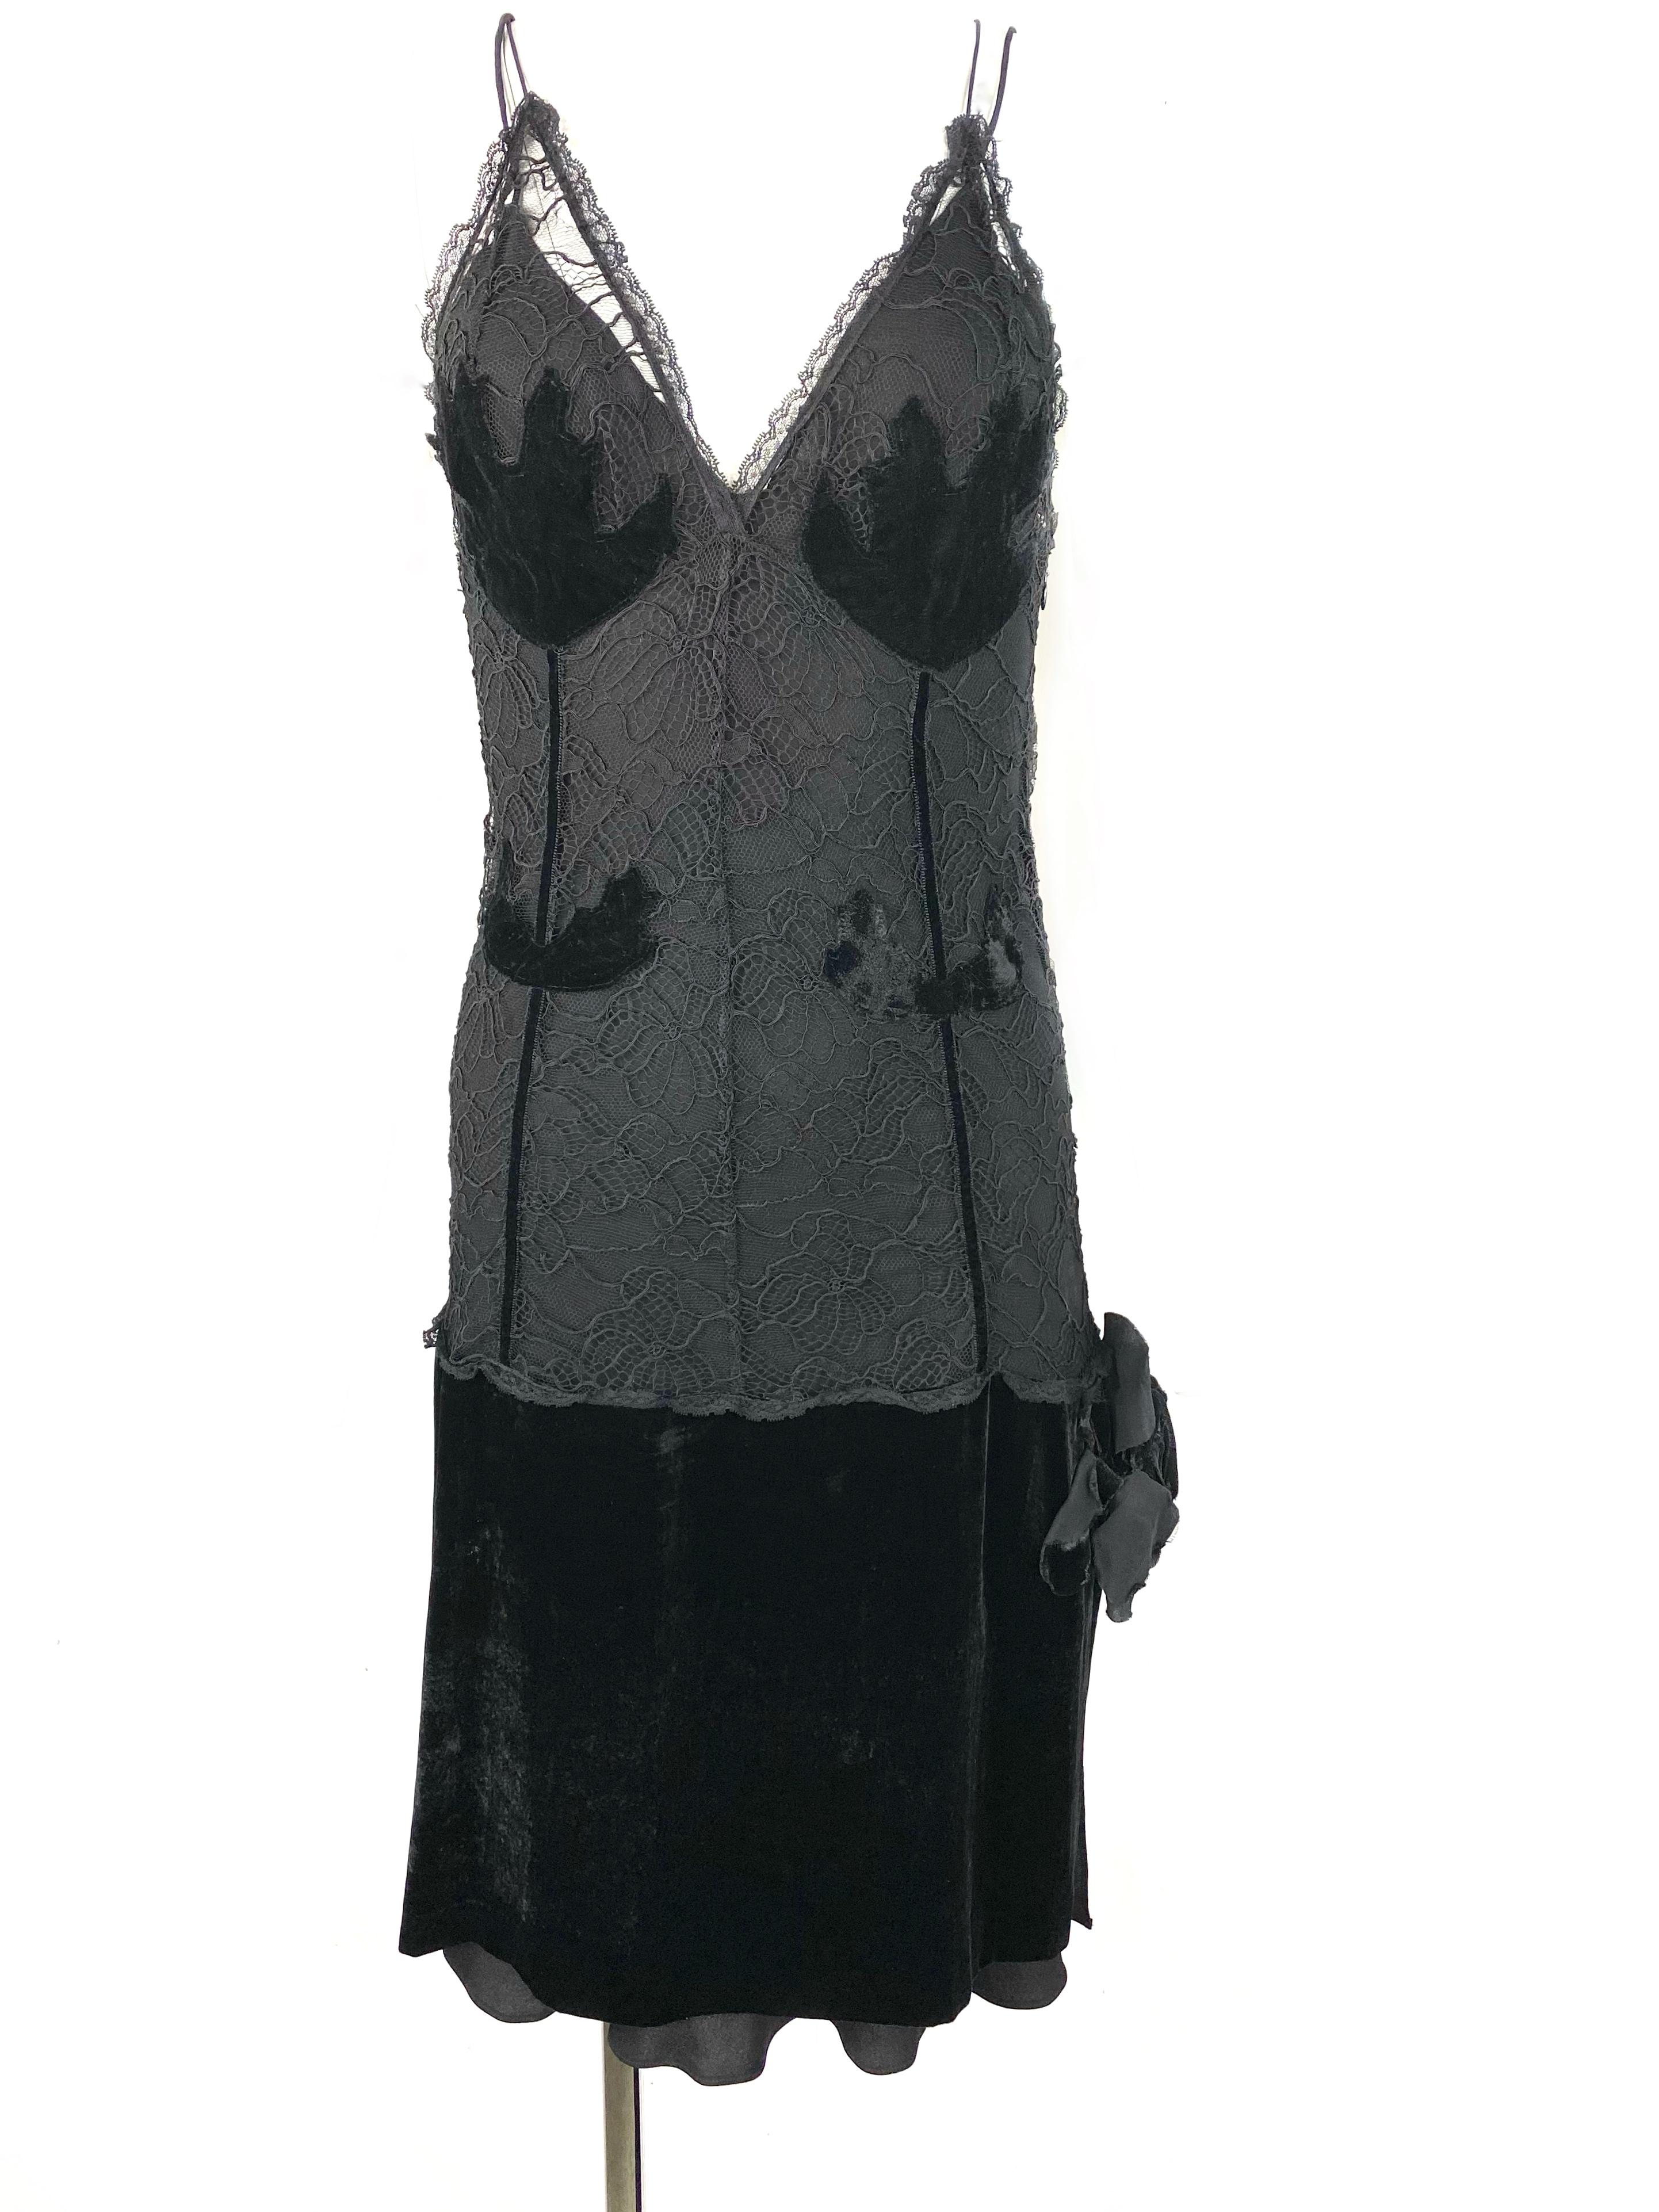 Vintage Sonia Rykiel Black Lace and Velvet Slip Dress with Jacket Set, Size 38 For Sale 1